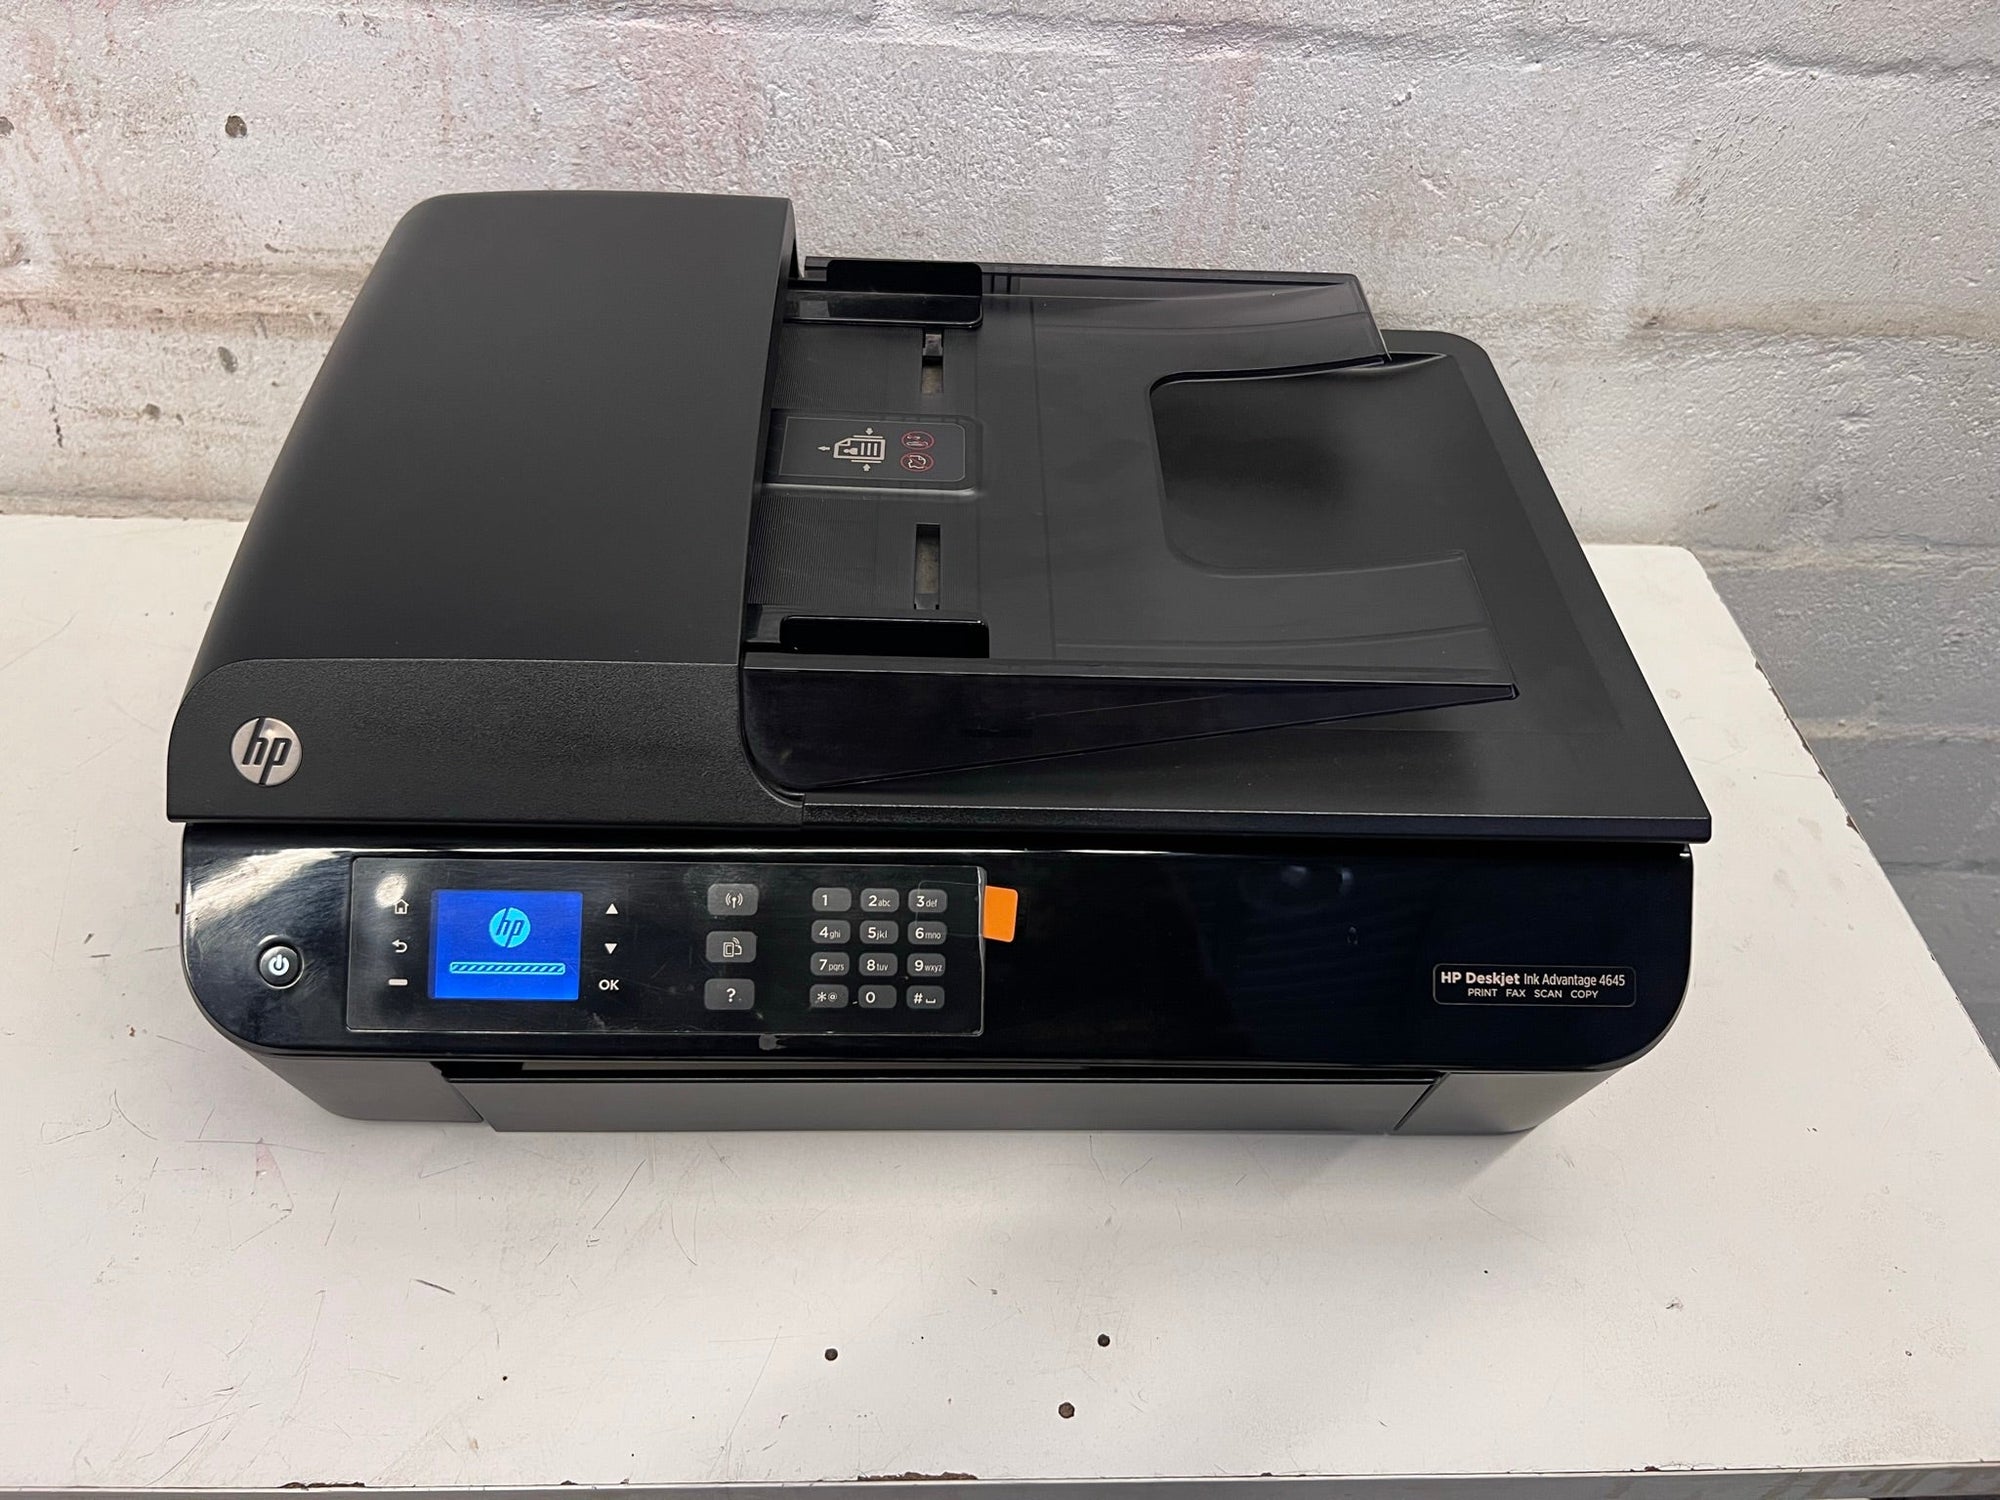 Black HP 4645 Deskjet Advantage Printer